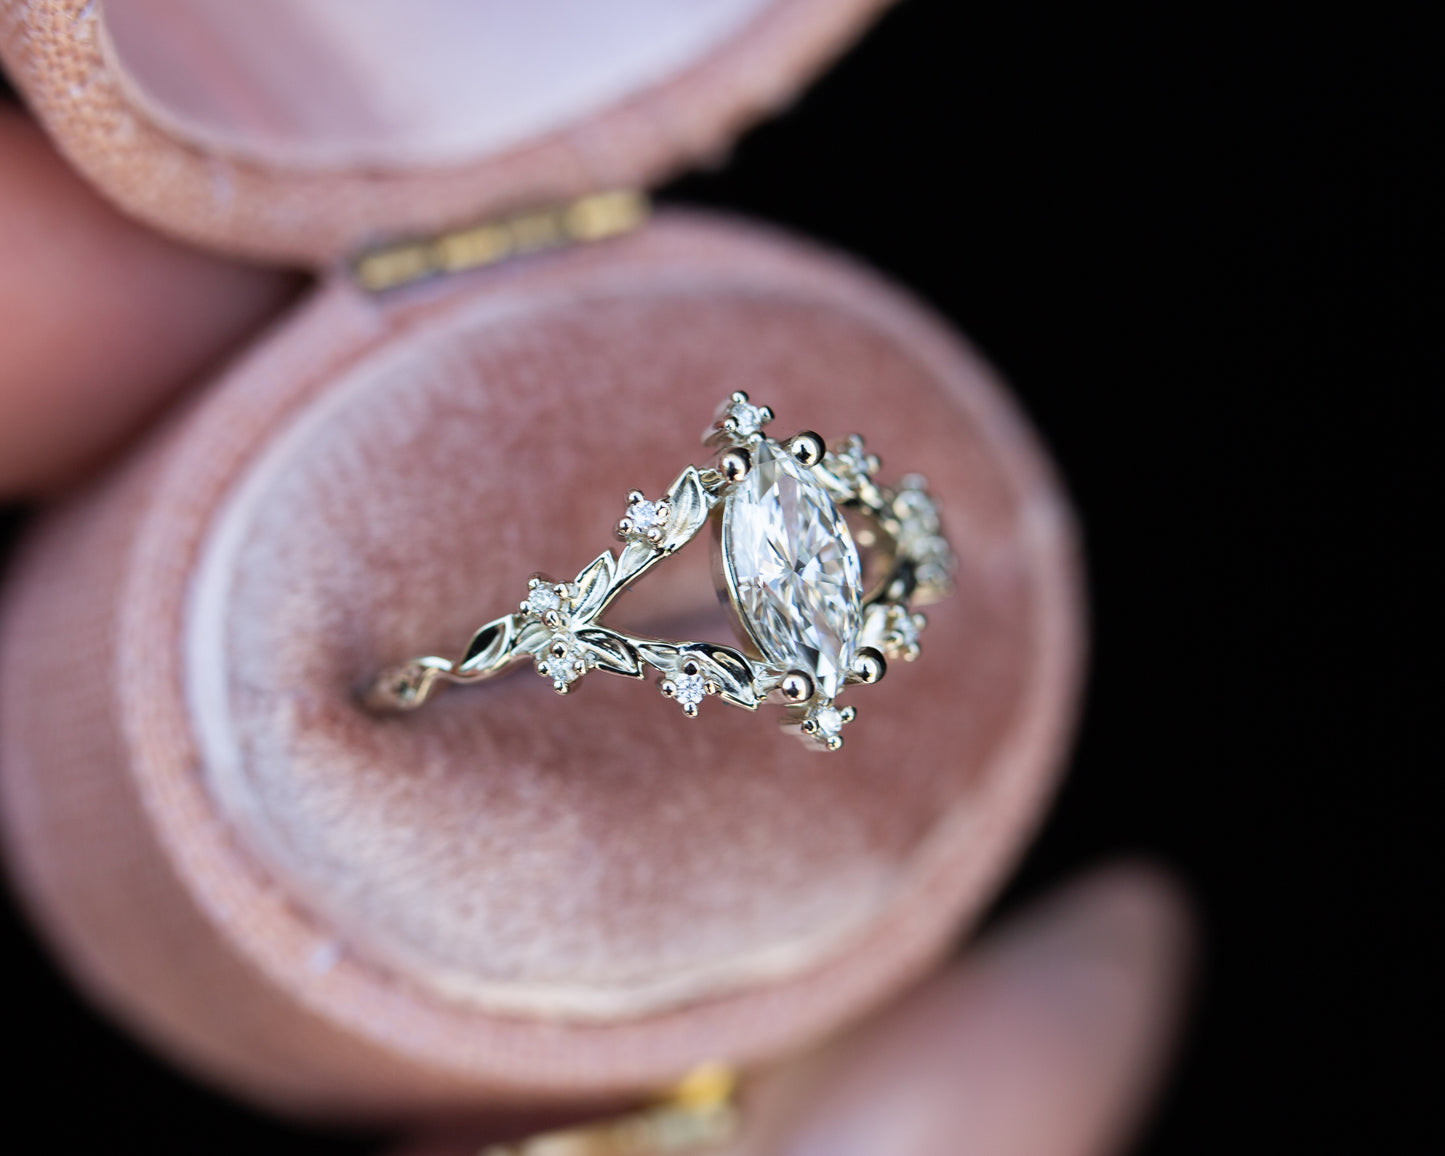 Briar rose setting with natural white diamond center stone